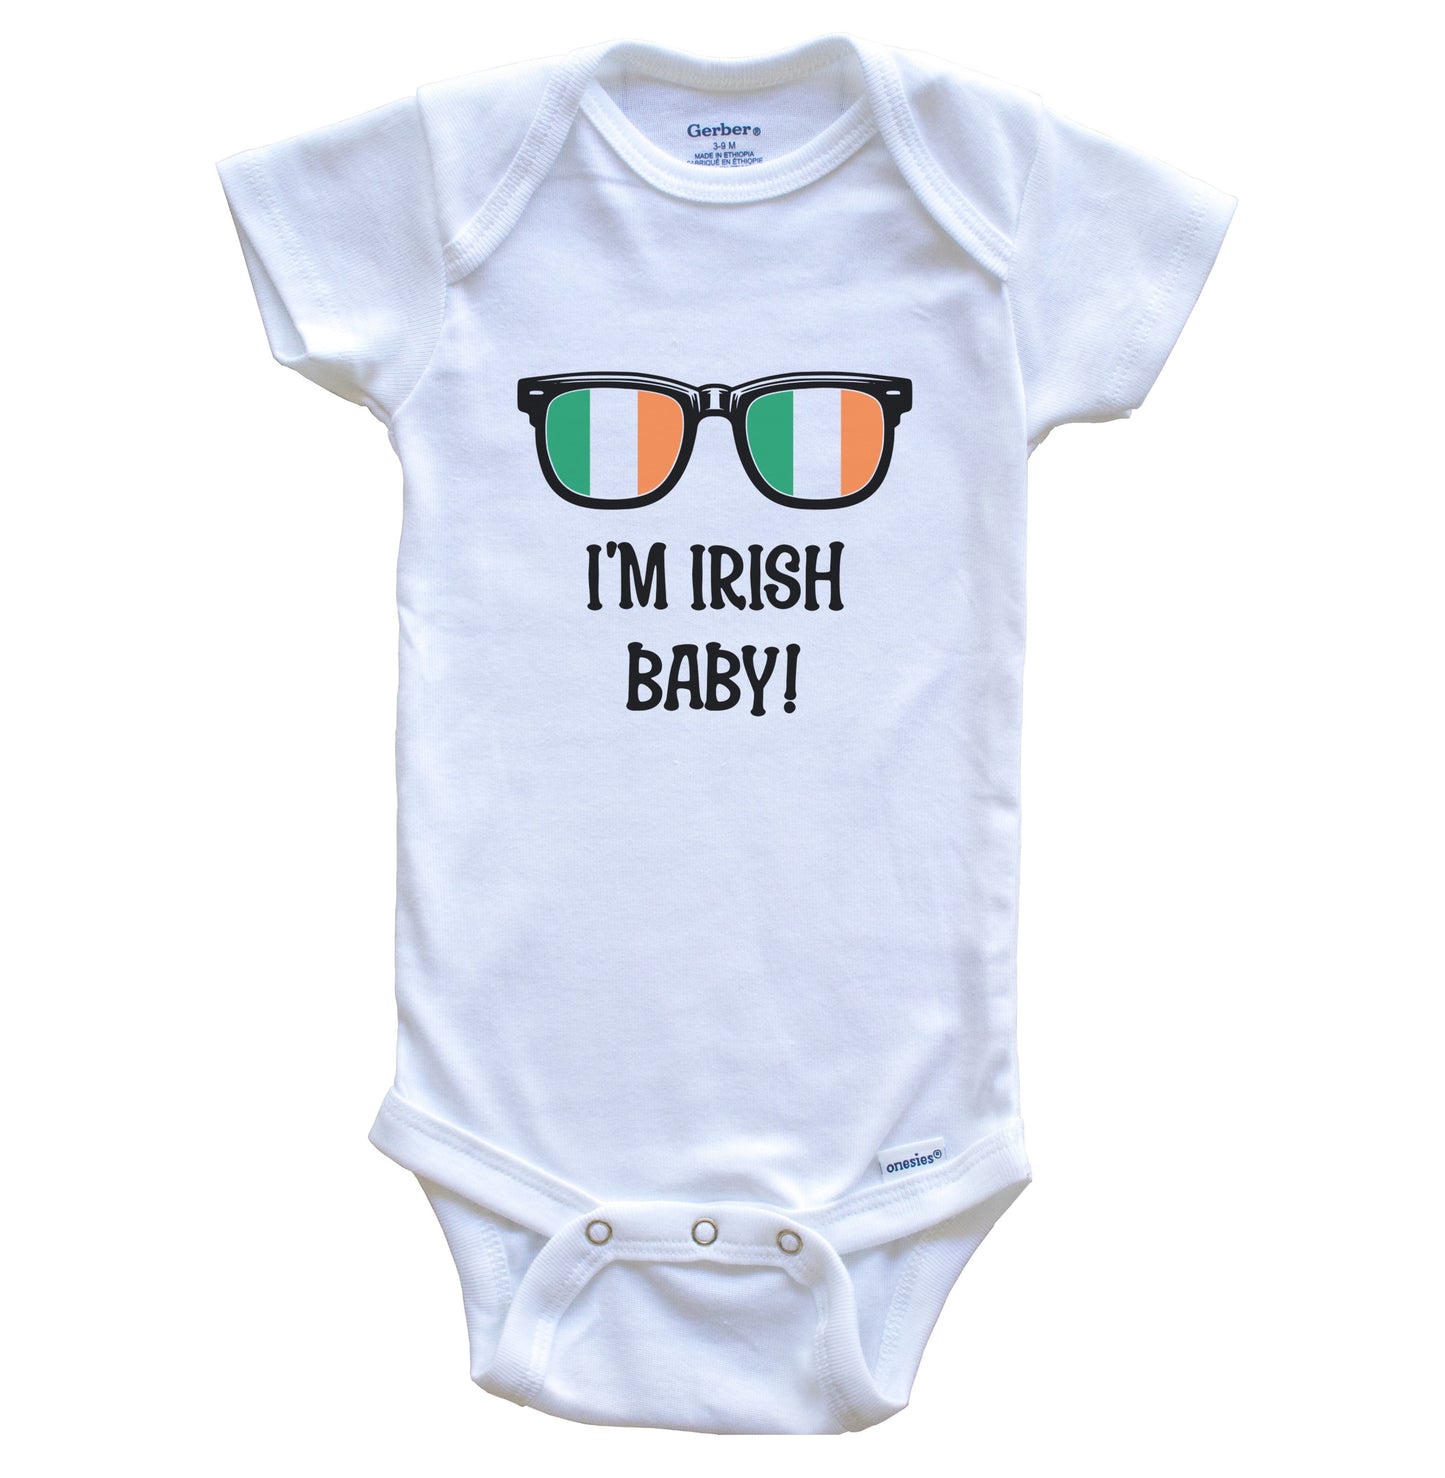 I'm Irish Baby Irish Flag Sunglasses Ireland Funny Baby Bodysuit